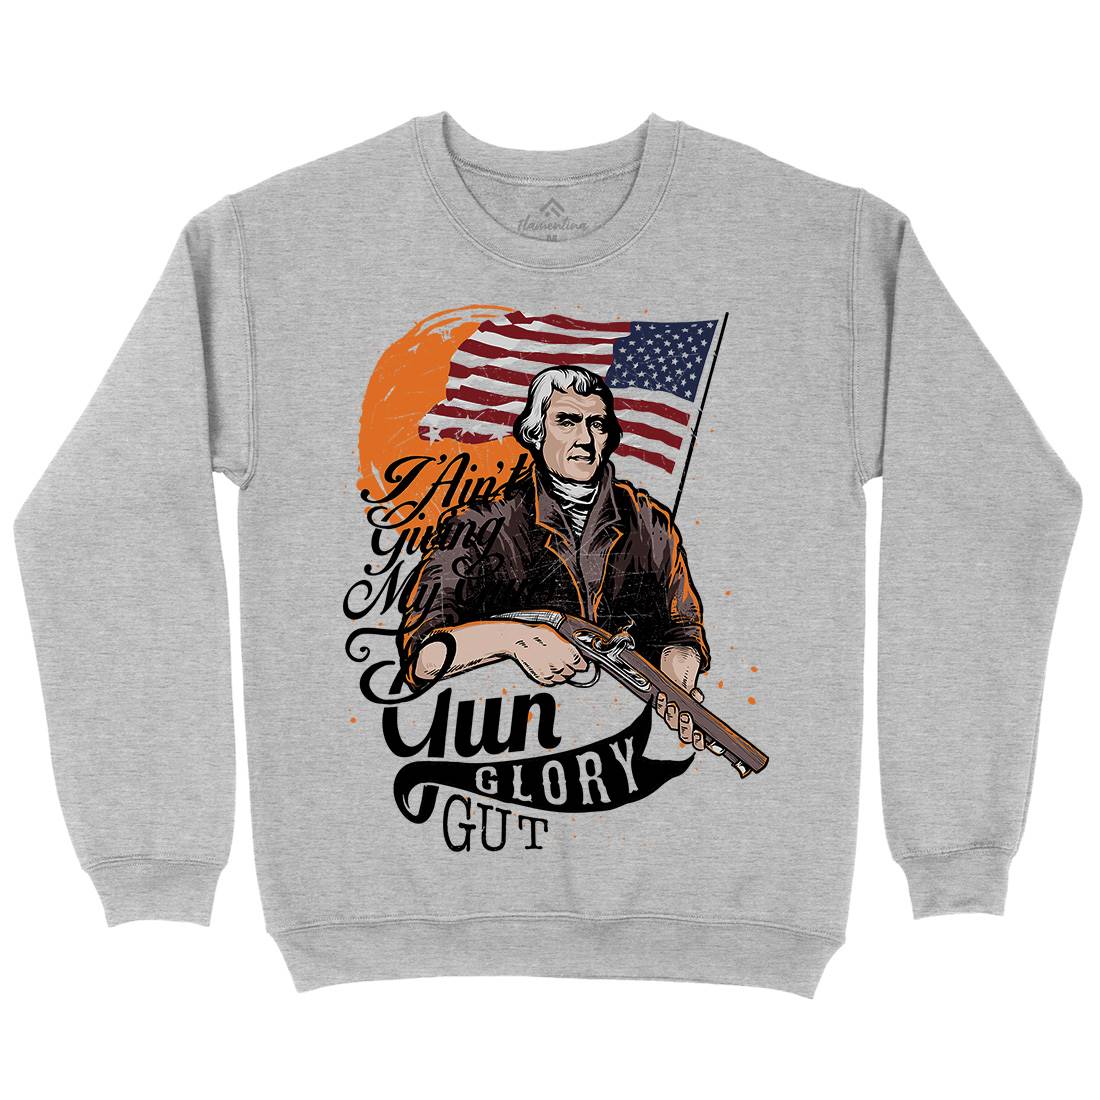 Gun Glory Gut Mens Crew Neck Sweatshirt American C940